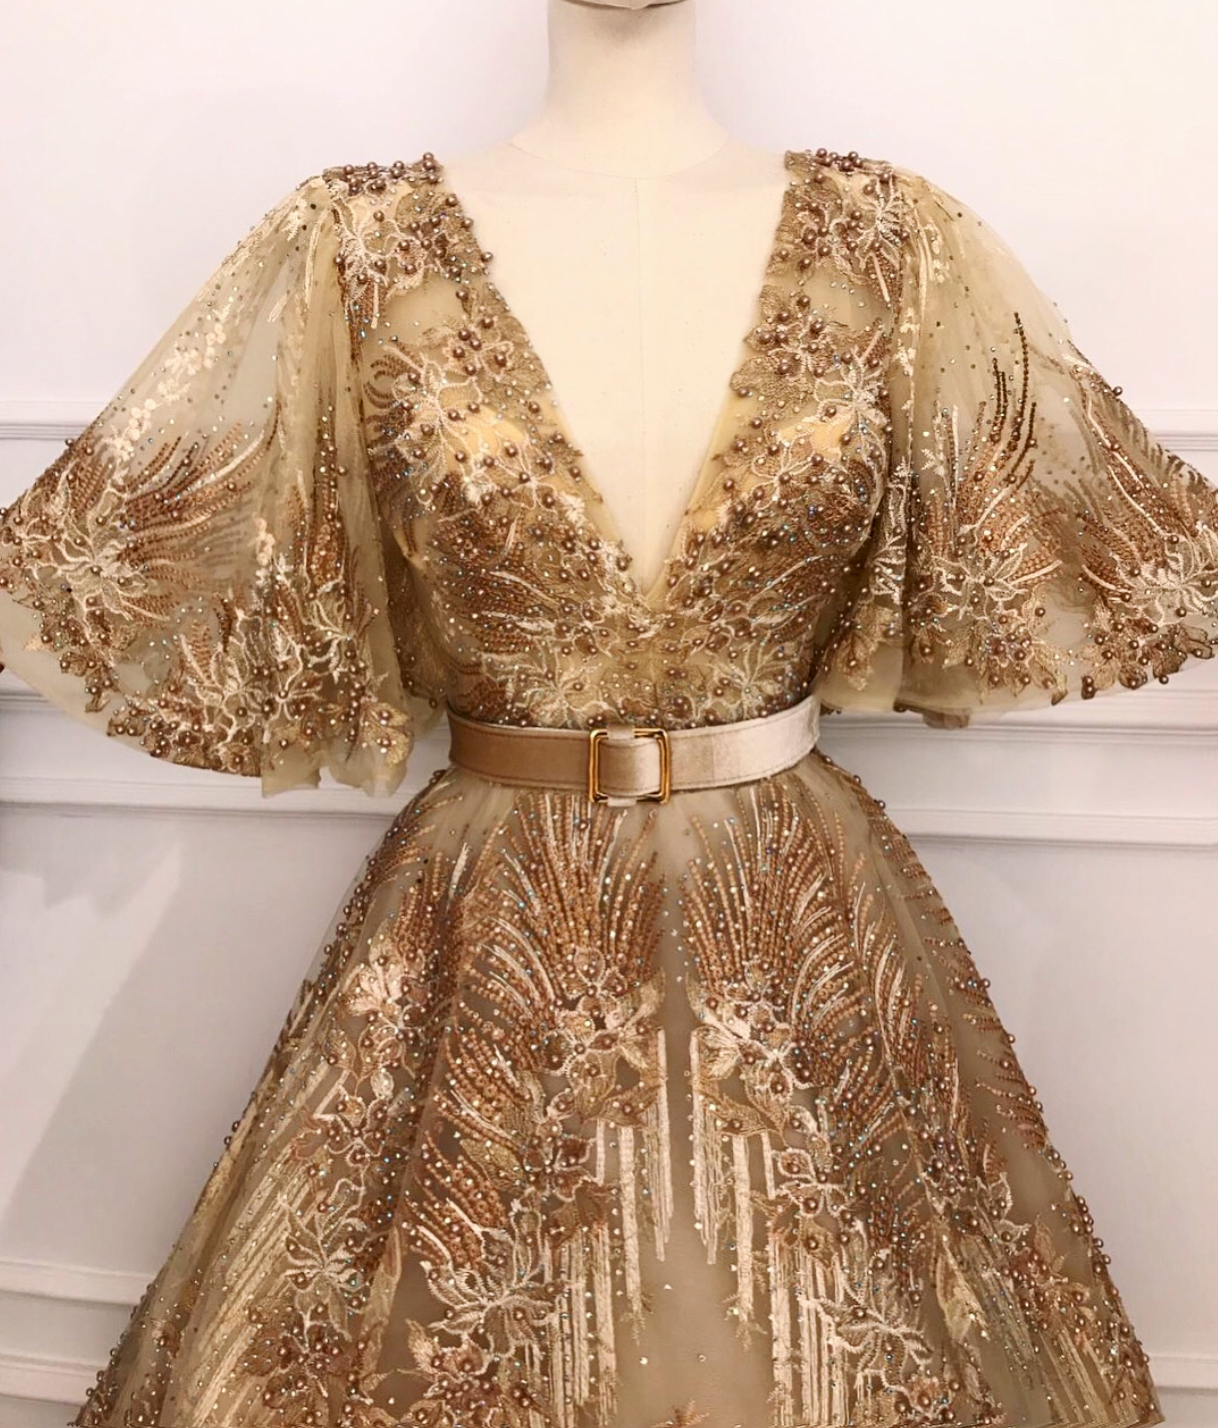 Gold A-Line dress with short sleeves, v-neck and belt